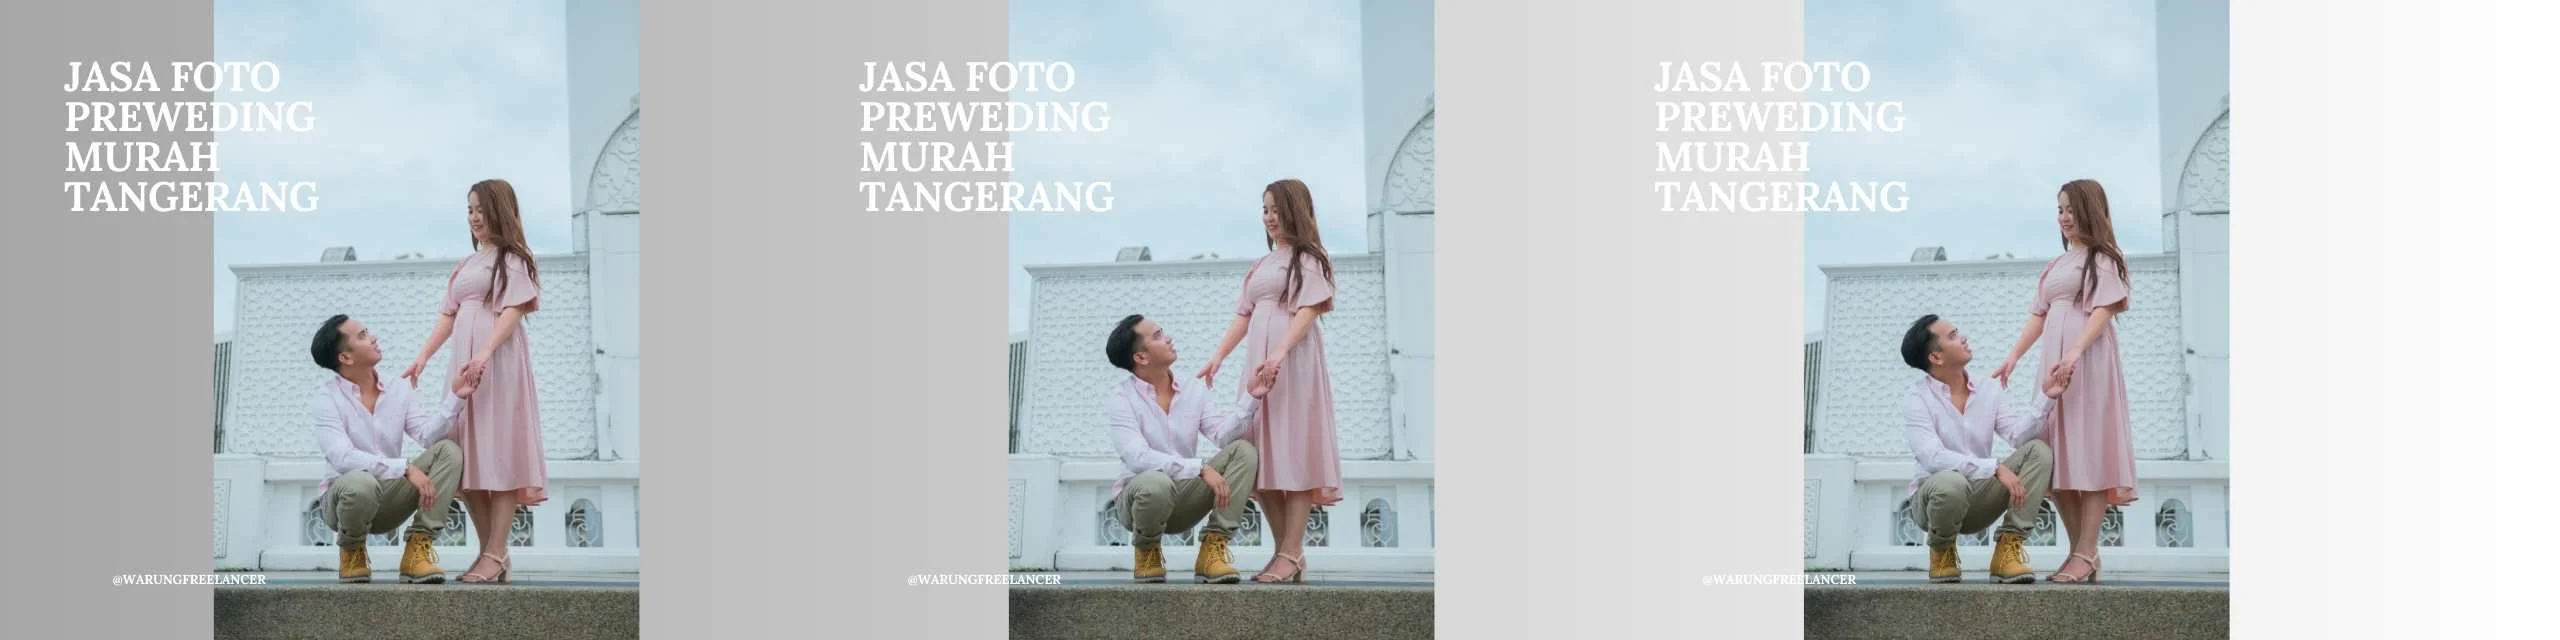 Jasa Foto Prewedding Tangerang 